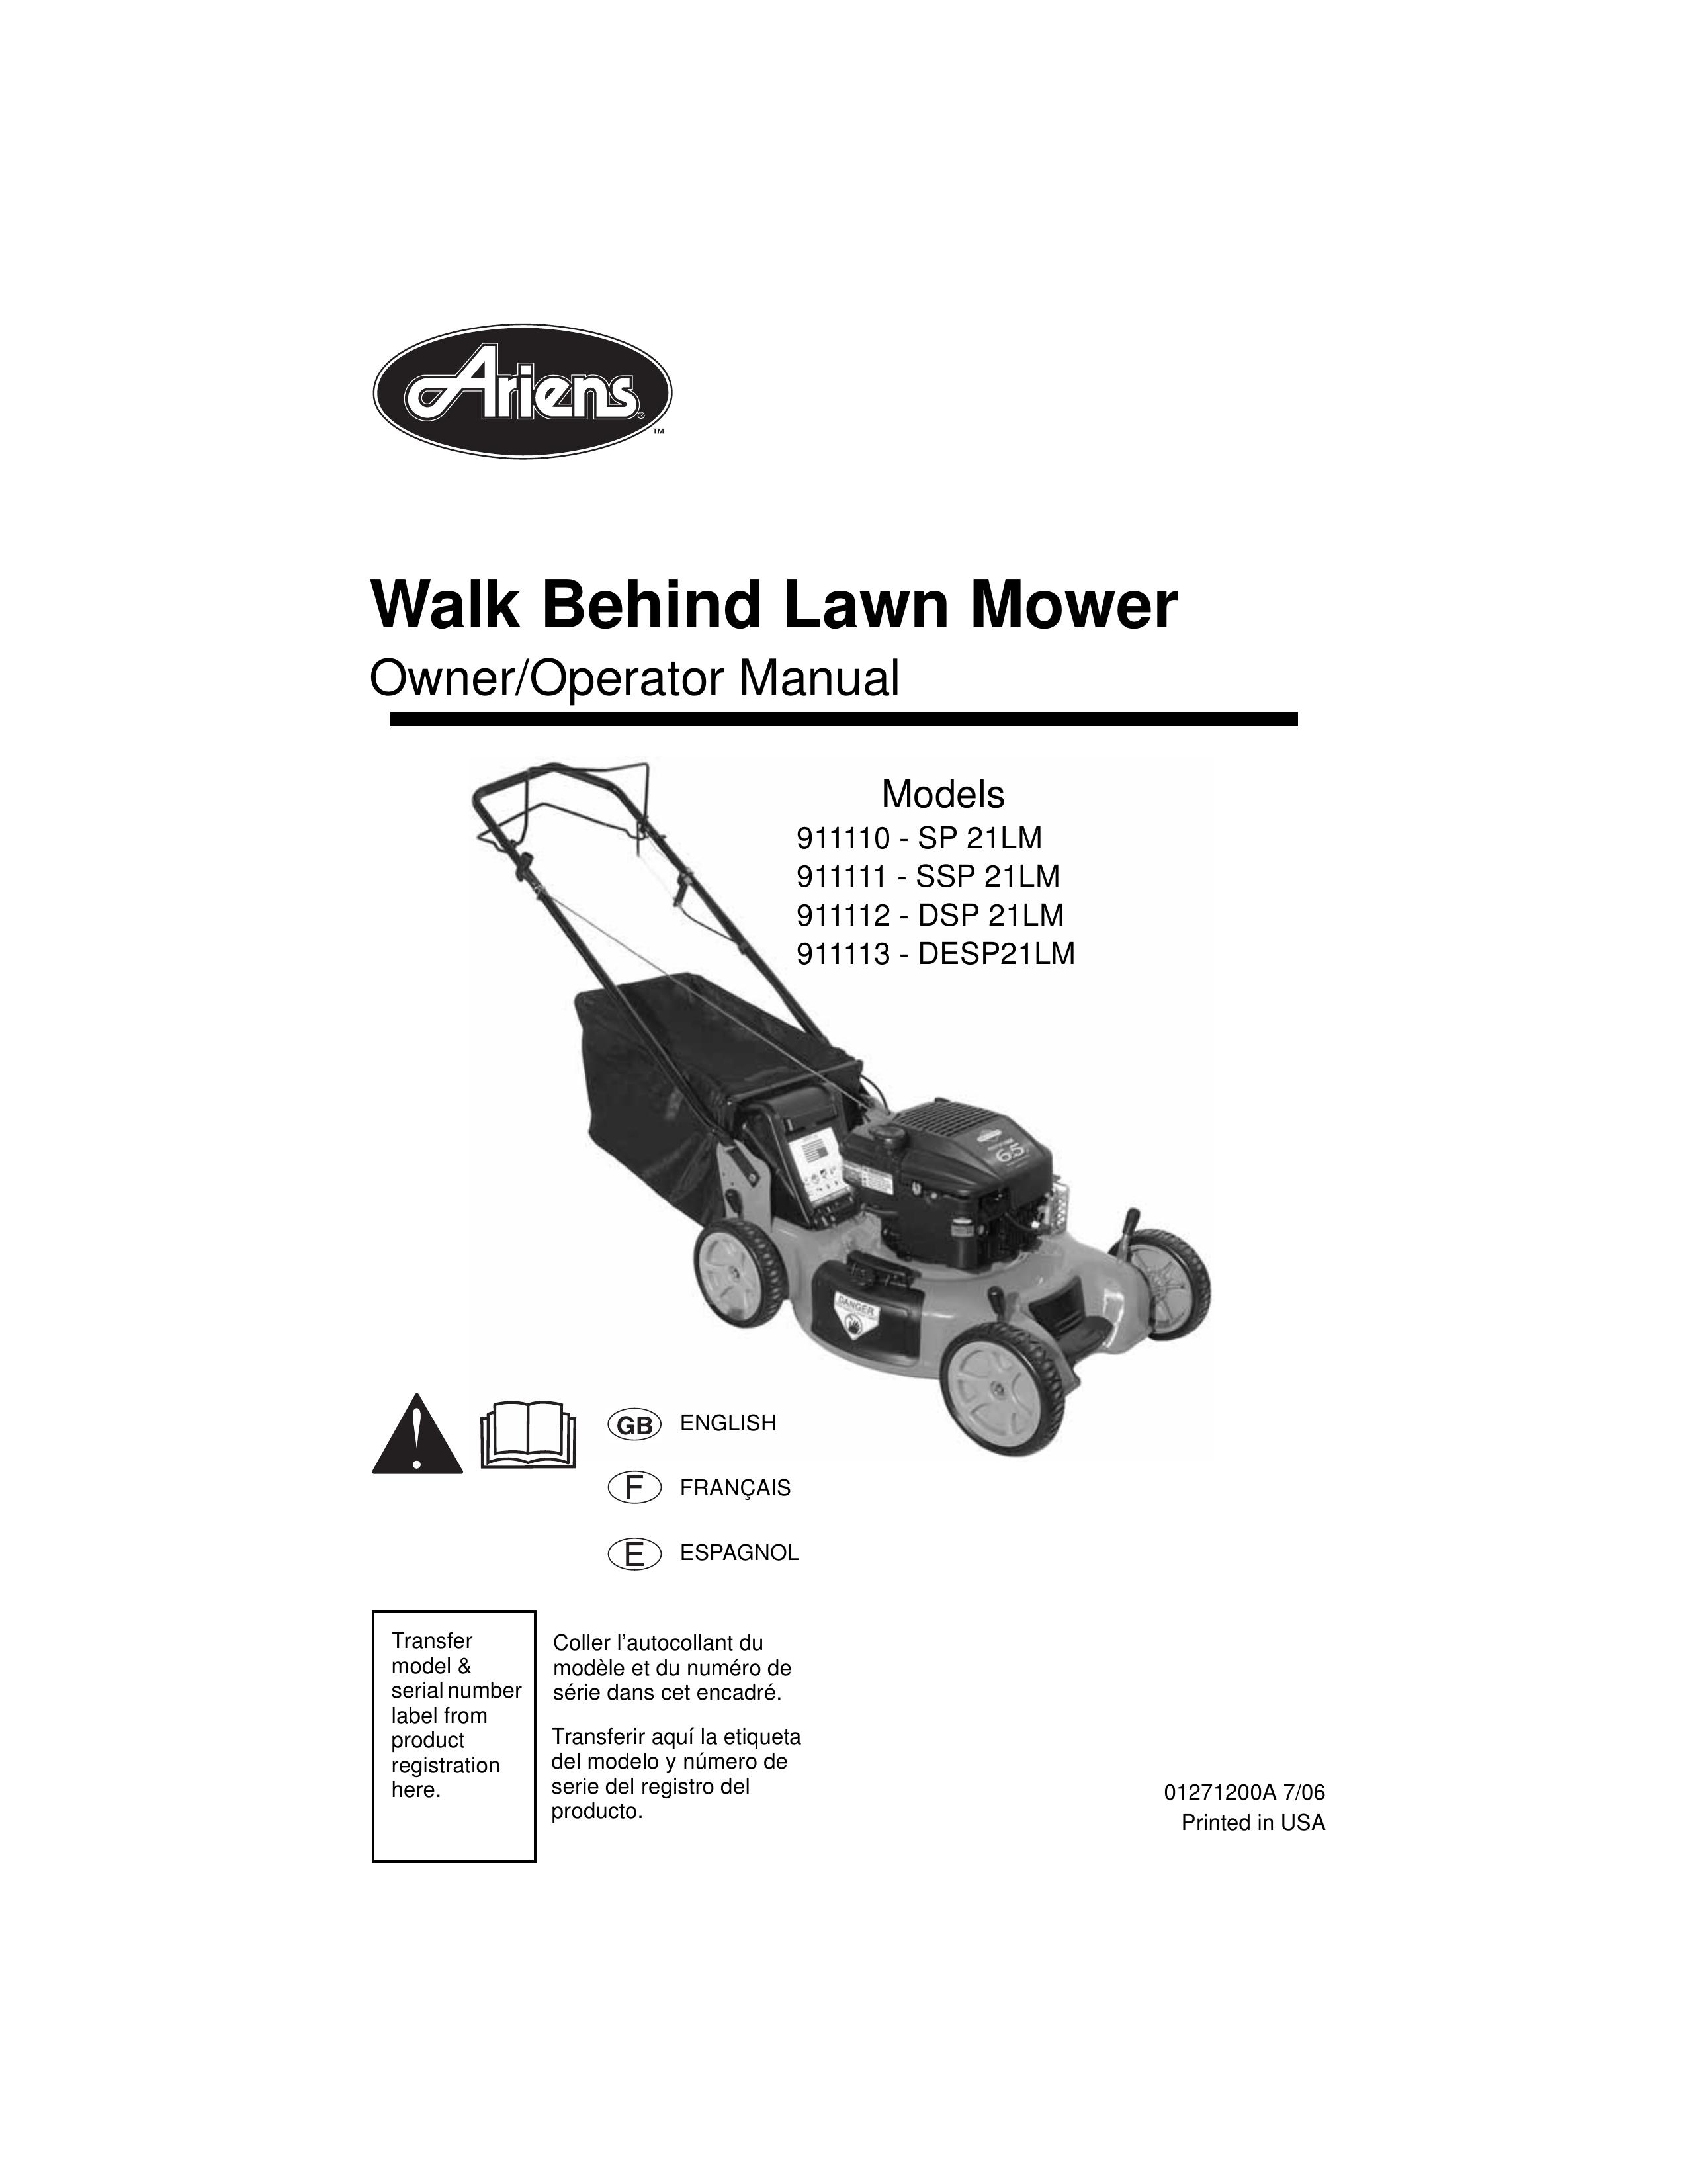 Ariens 911111 - SSP 21LM Lawn Mower User Manual